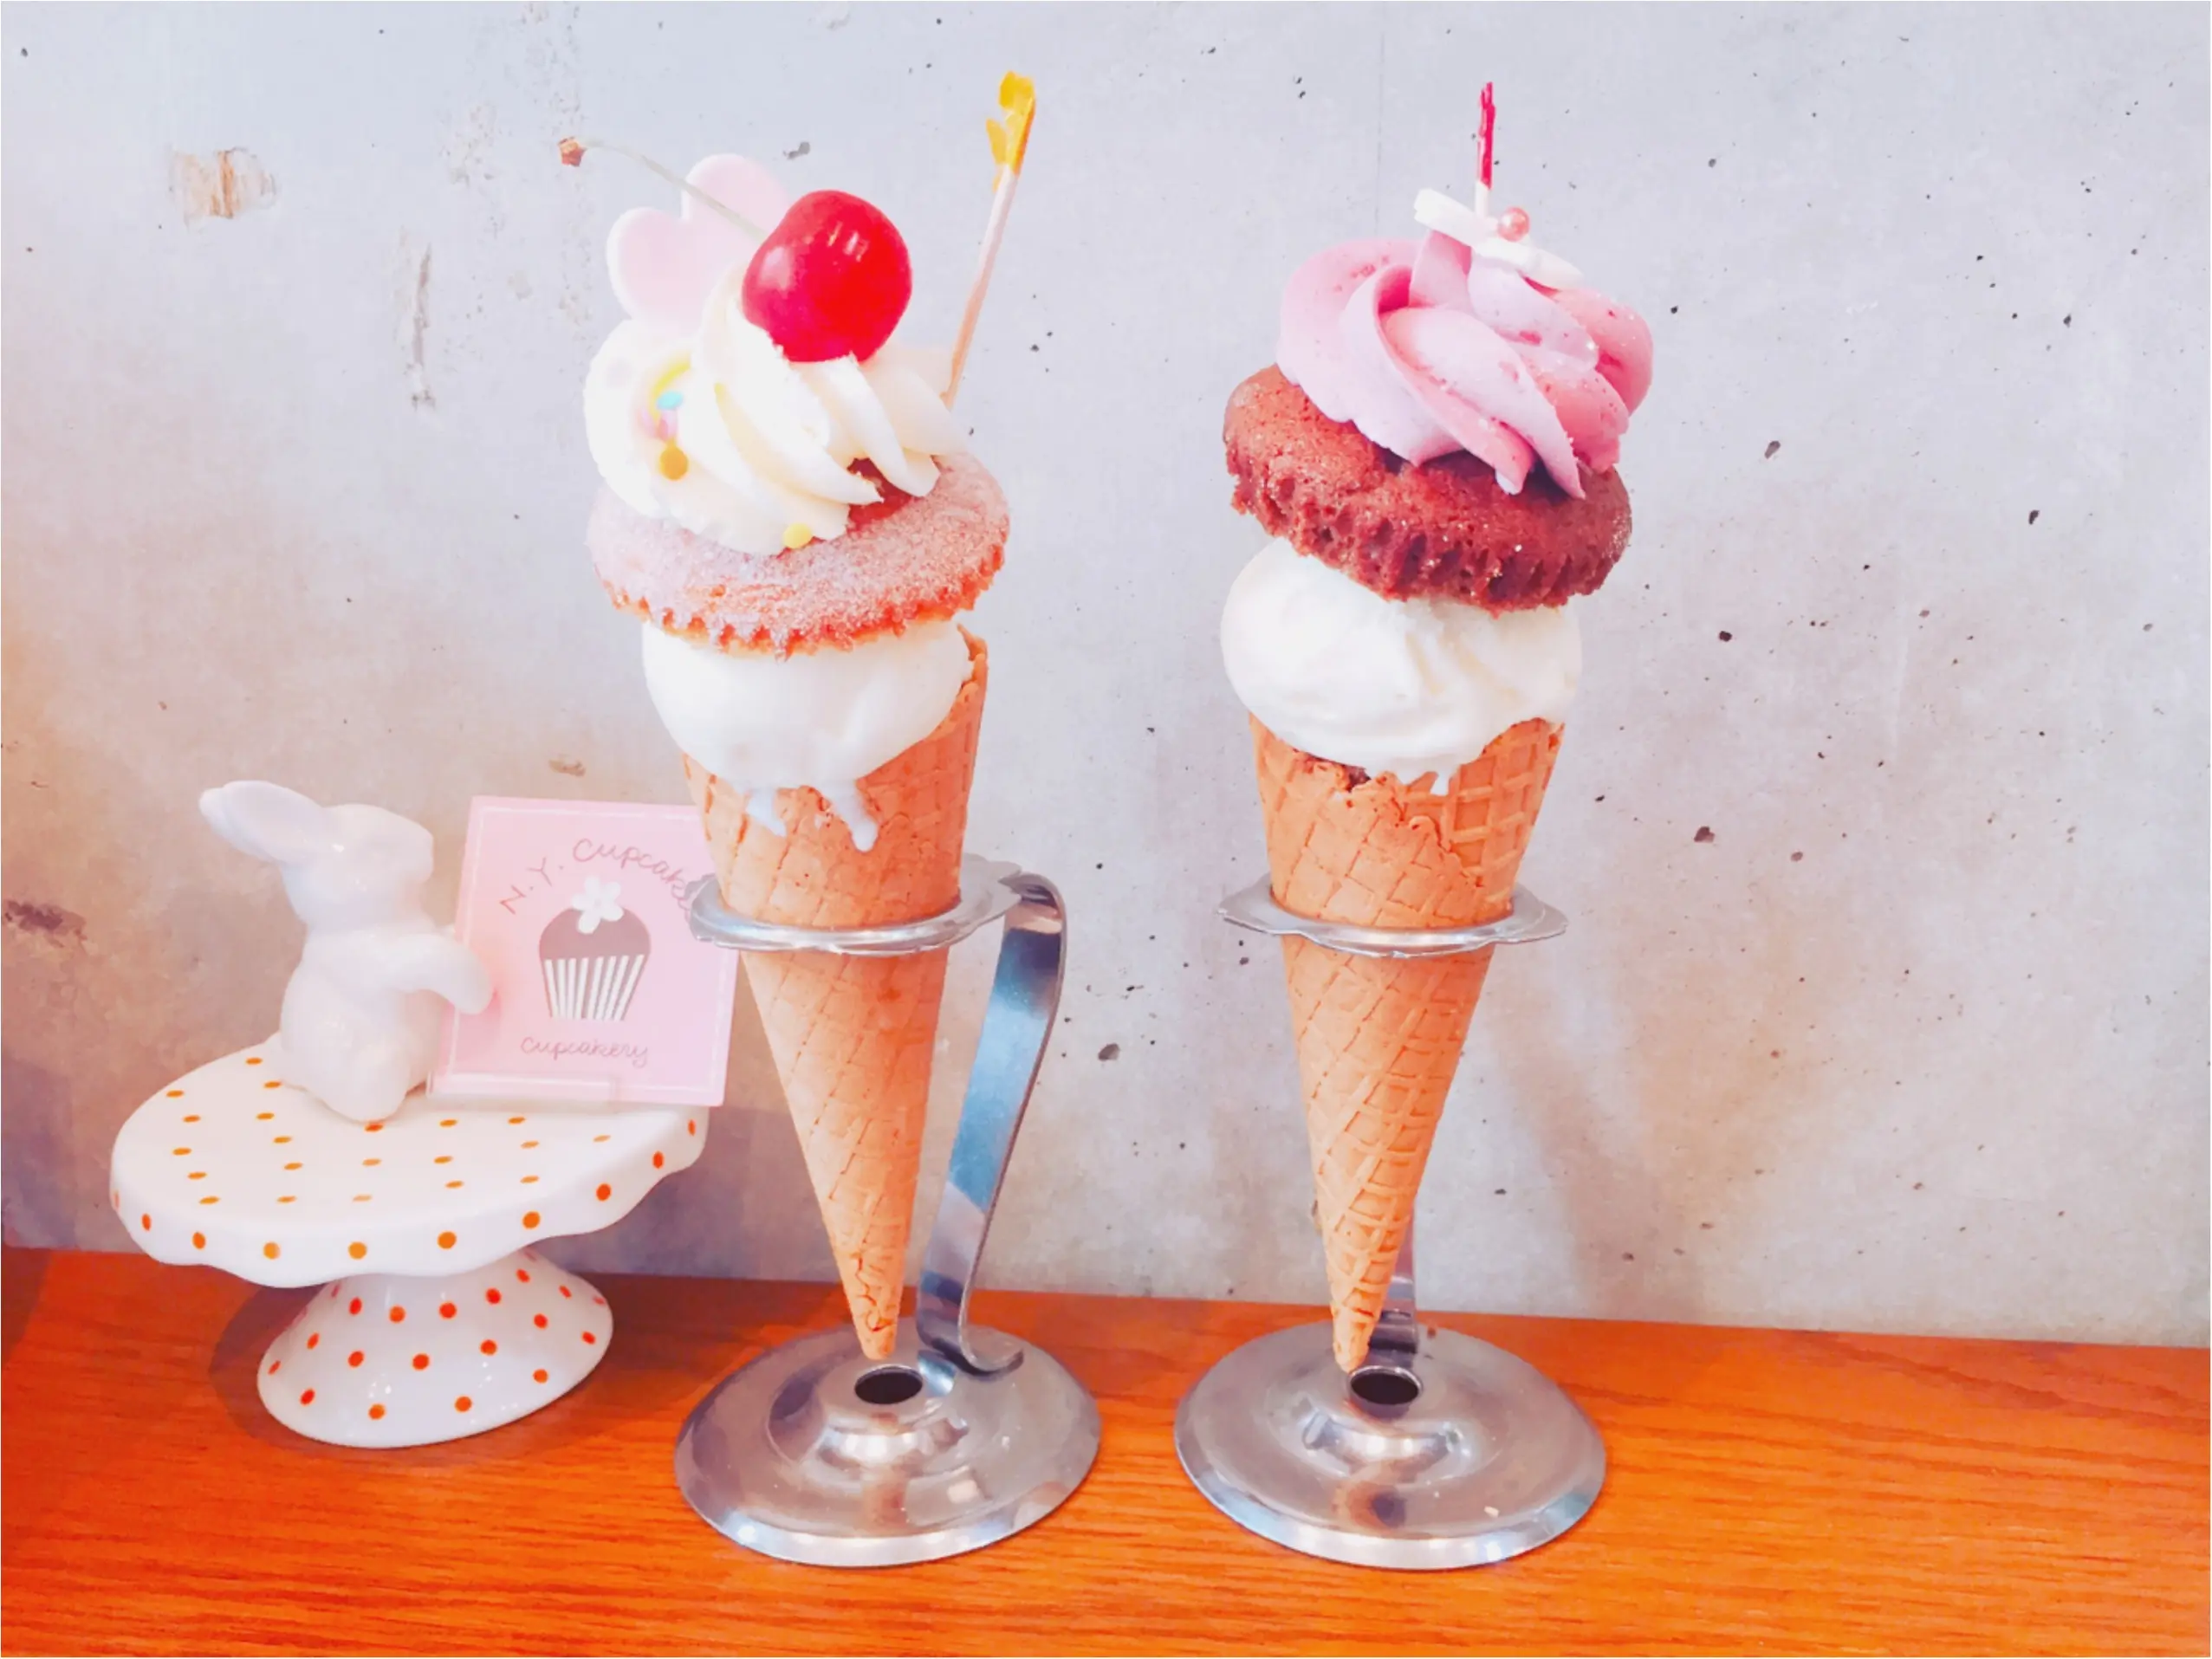 N Y Cupcakes の夏限定 アイス カップケーキが美味しすぎる Moreインフルエンサーズブログ Daily More